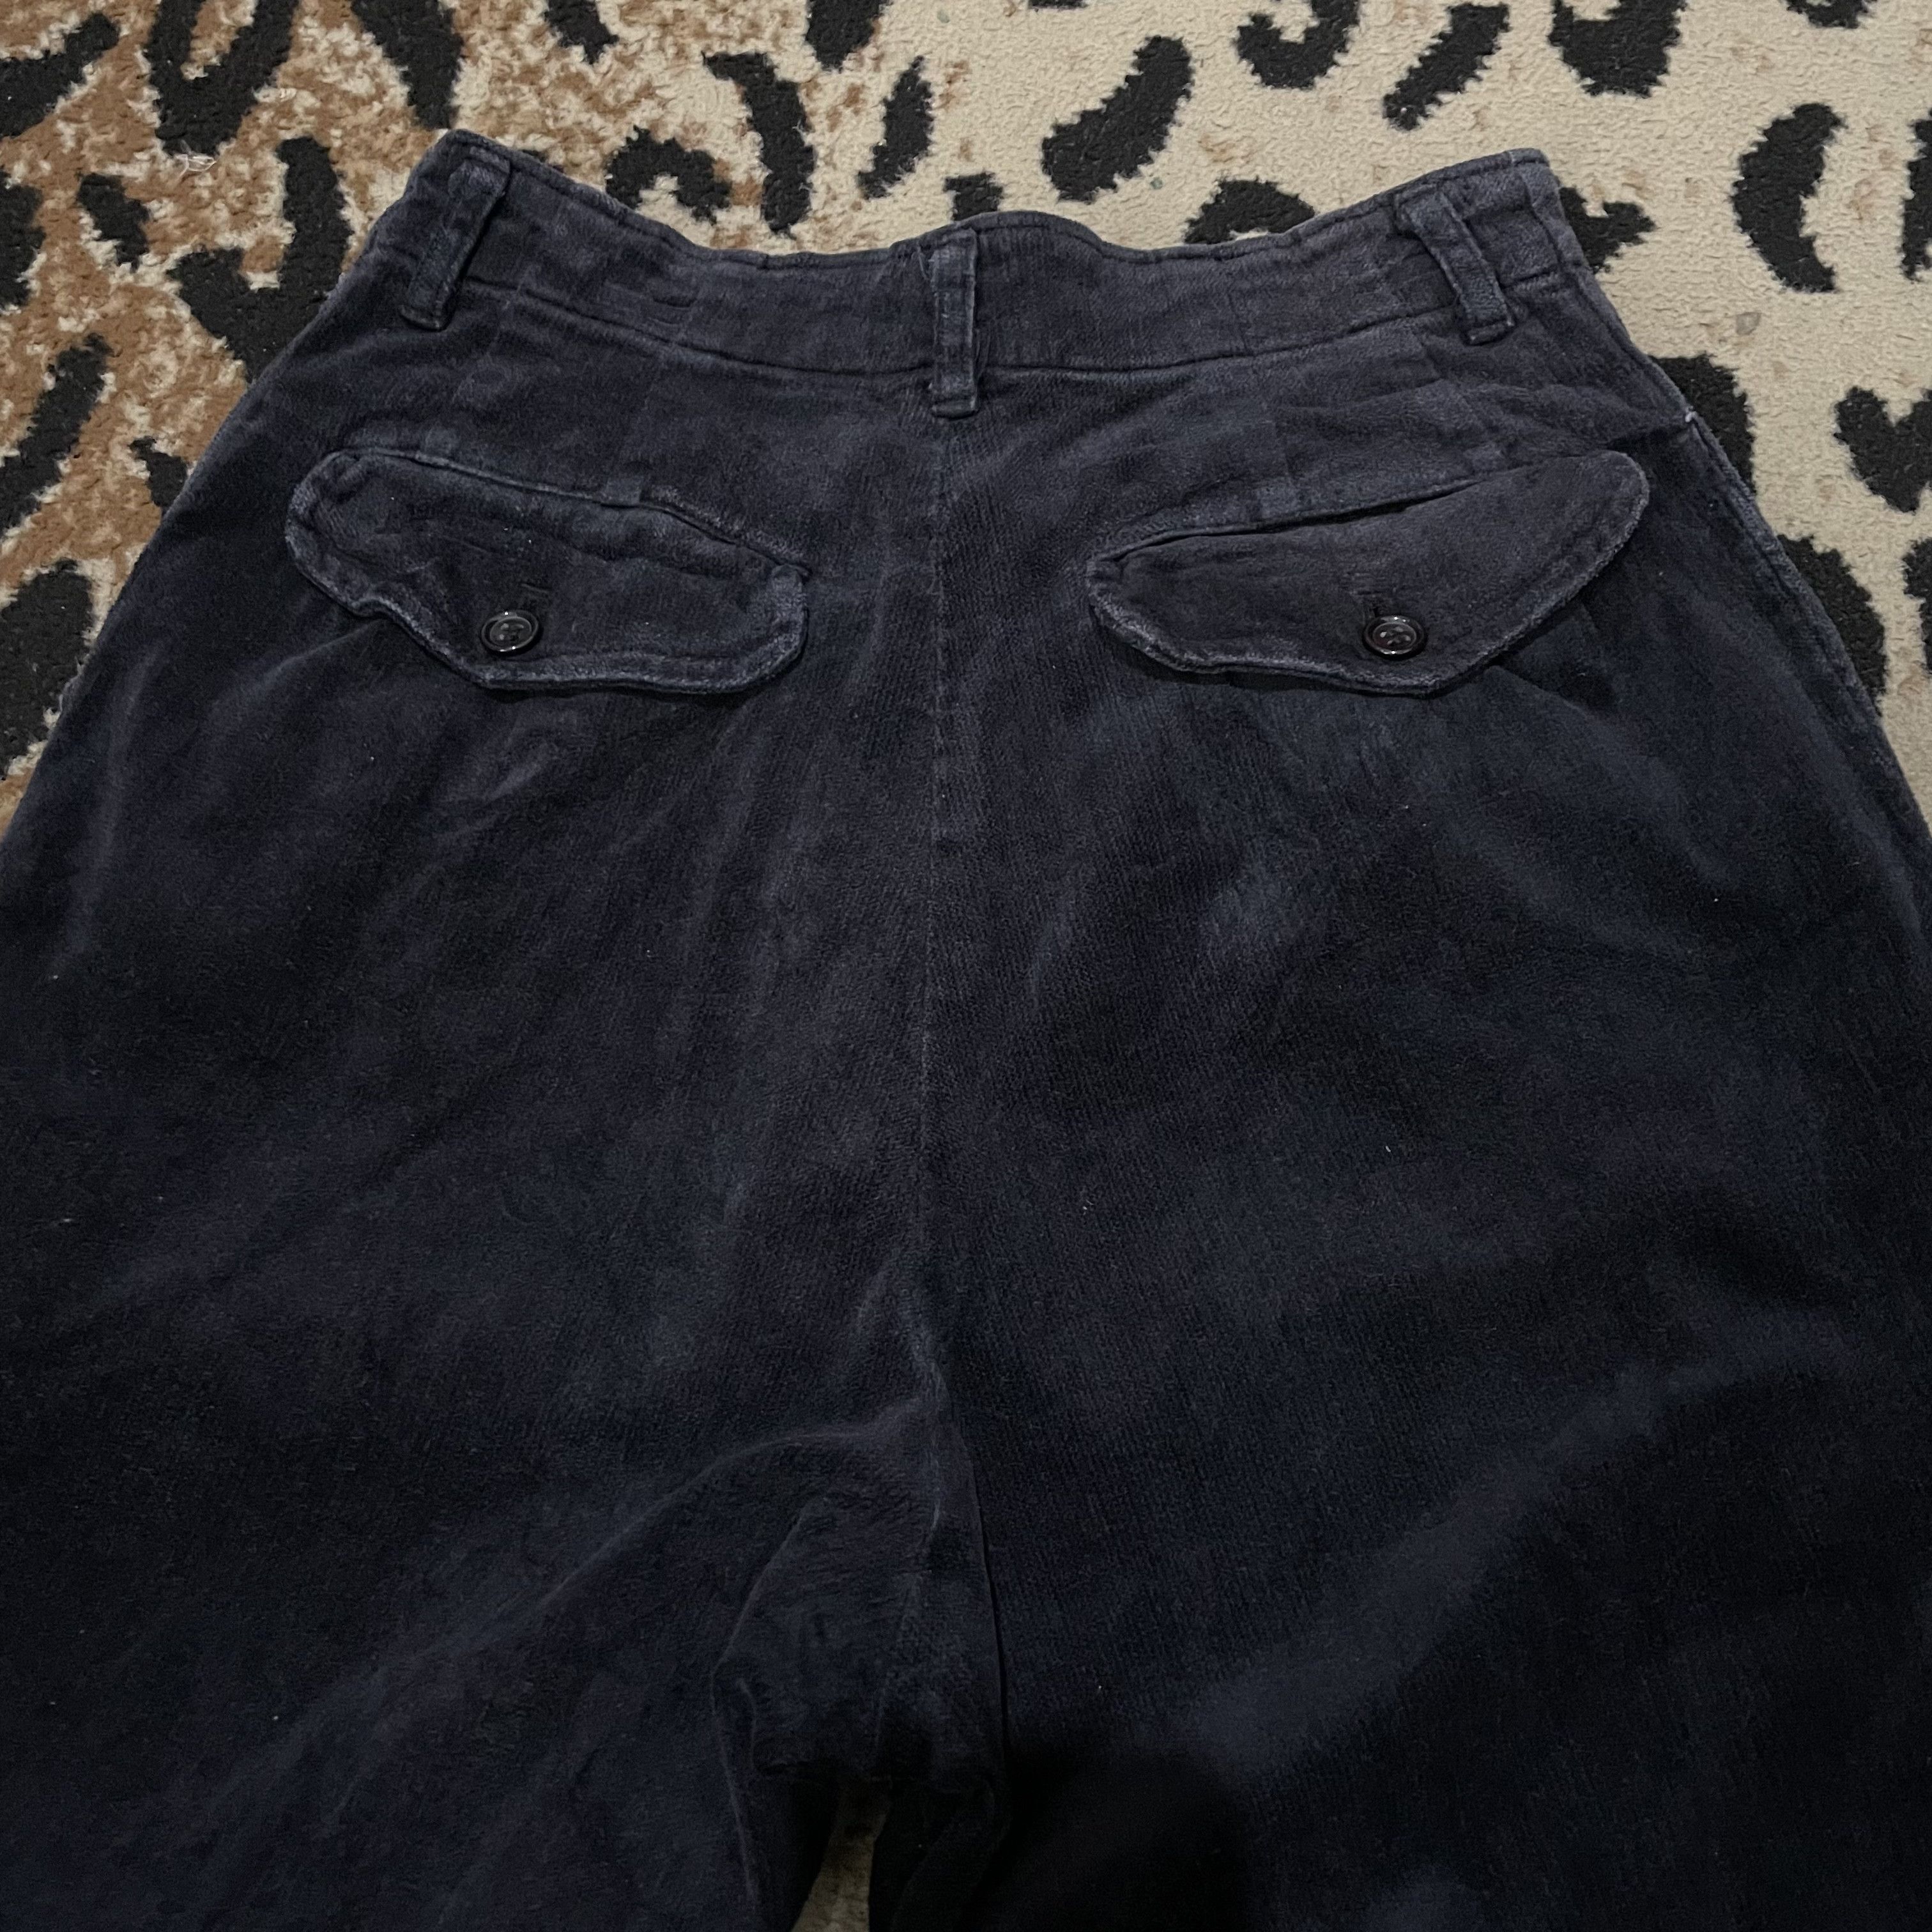 Issey Miyake Vintage Hai Sporting Gear Pants Size US 28 / EU 44 - 4 Thumbnail